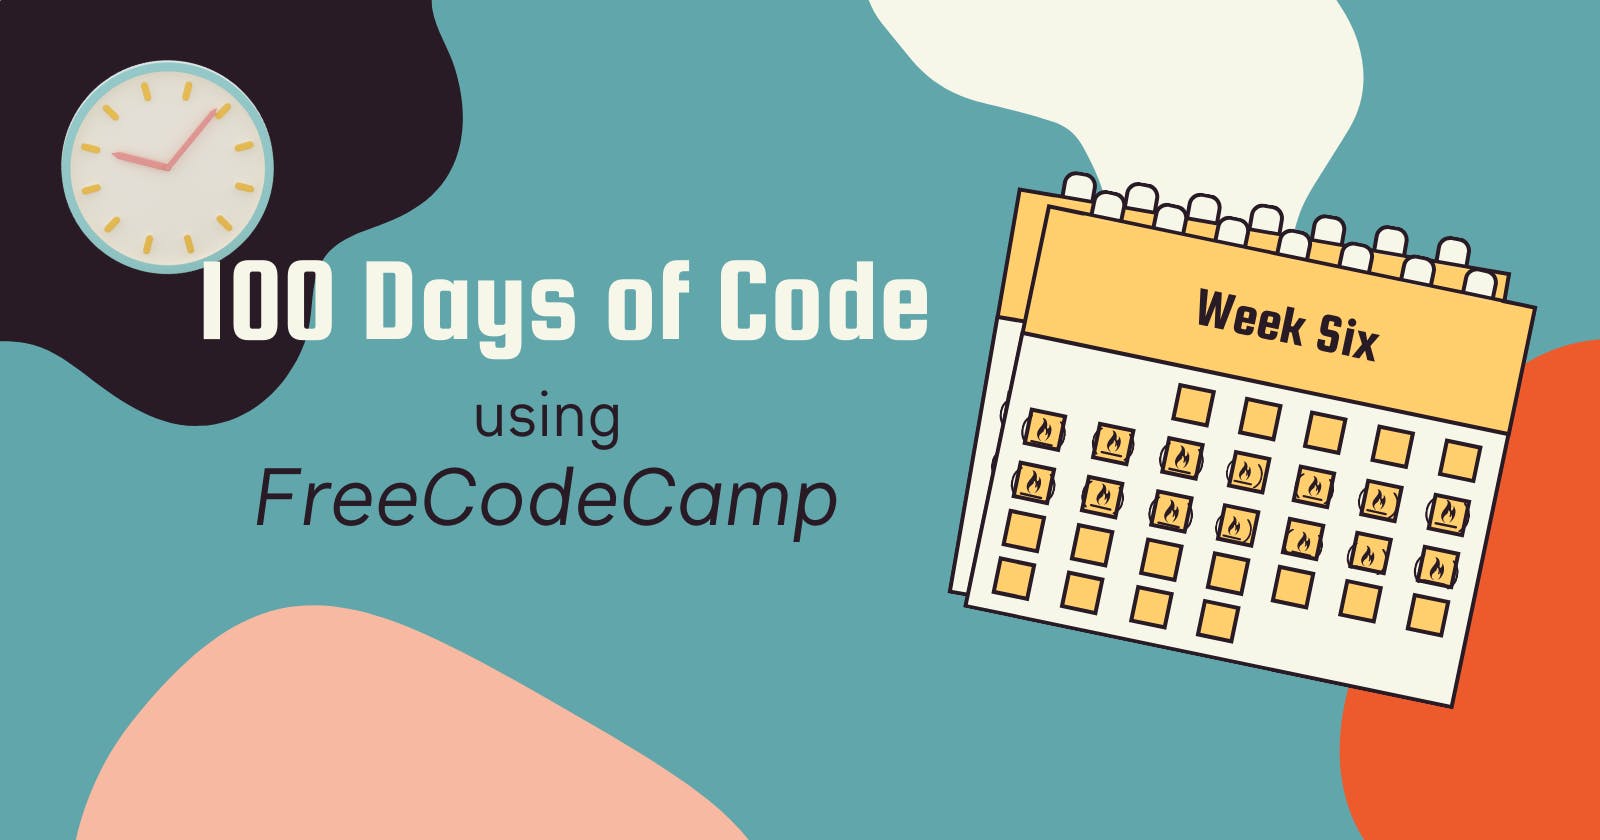 100DaysOfCode using FreeCodeCamp - Week 6